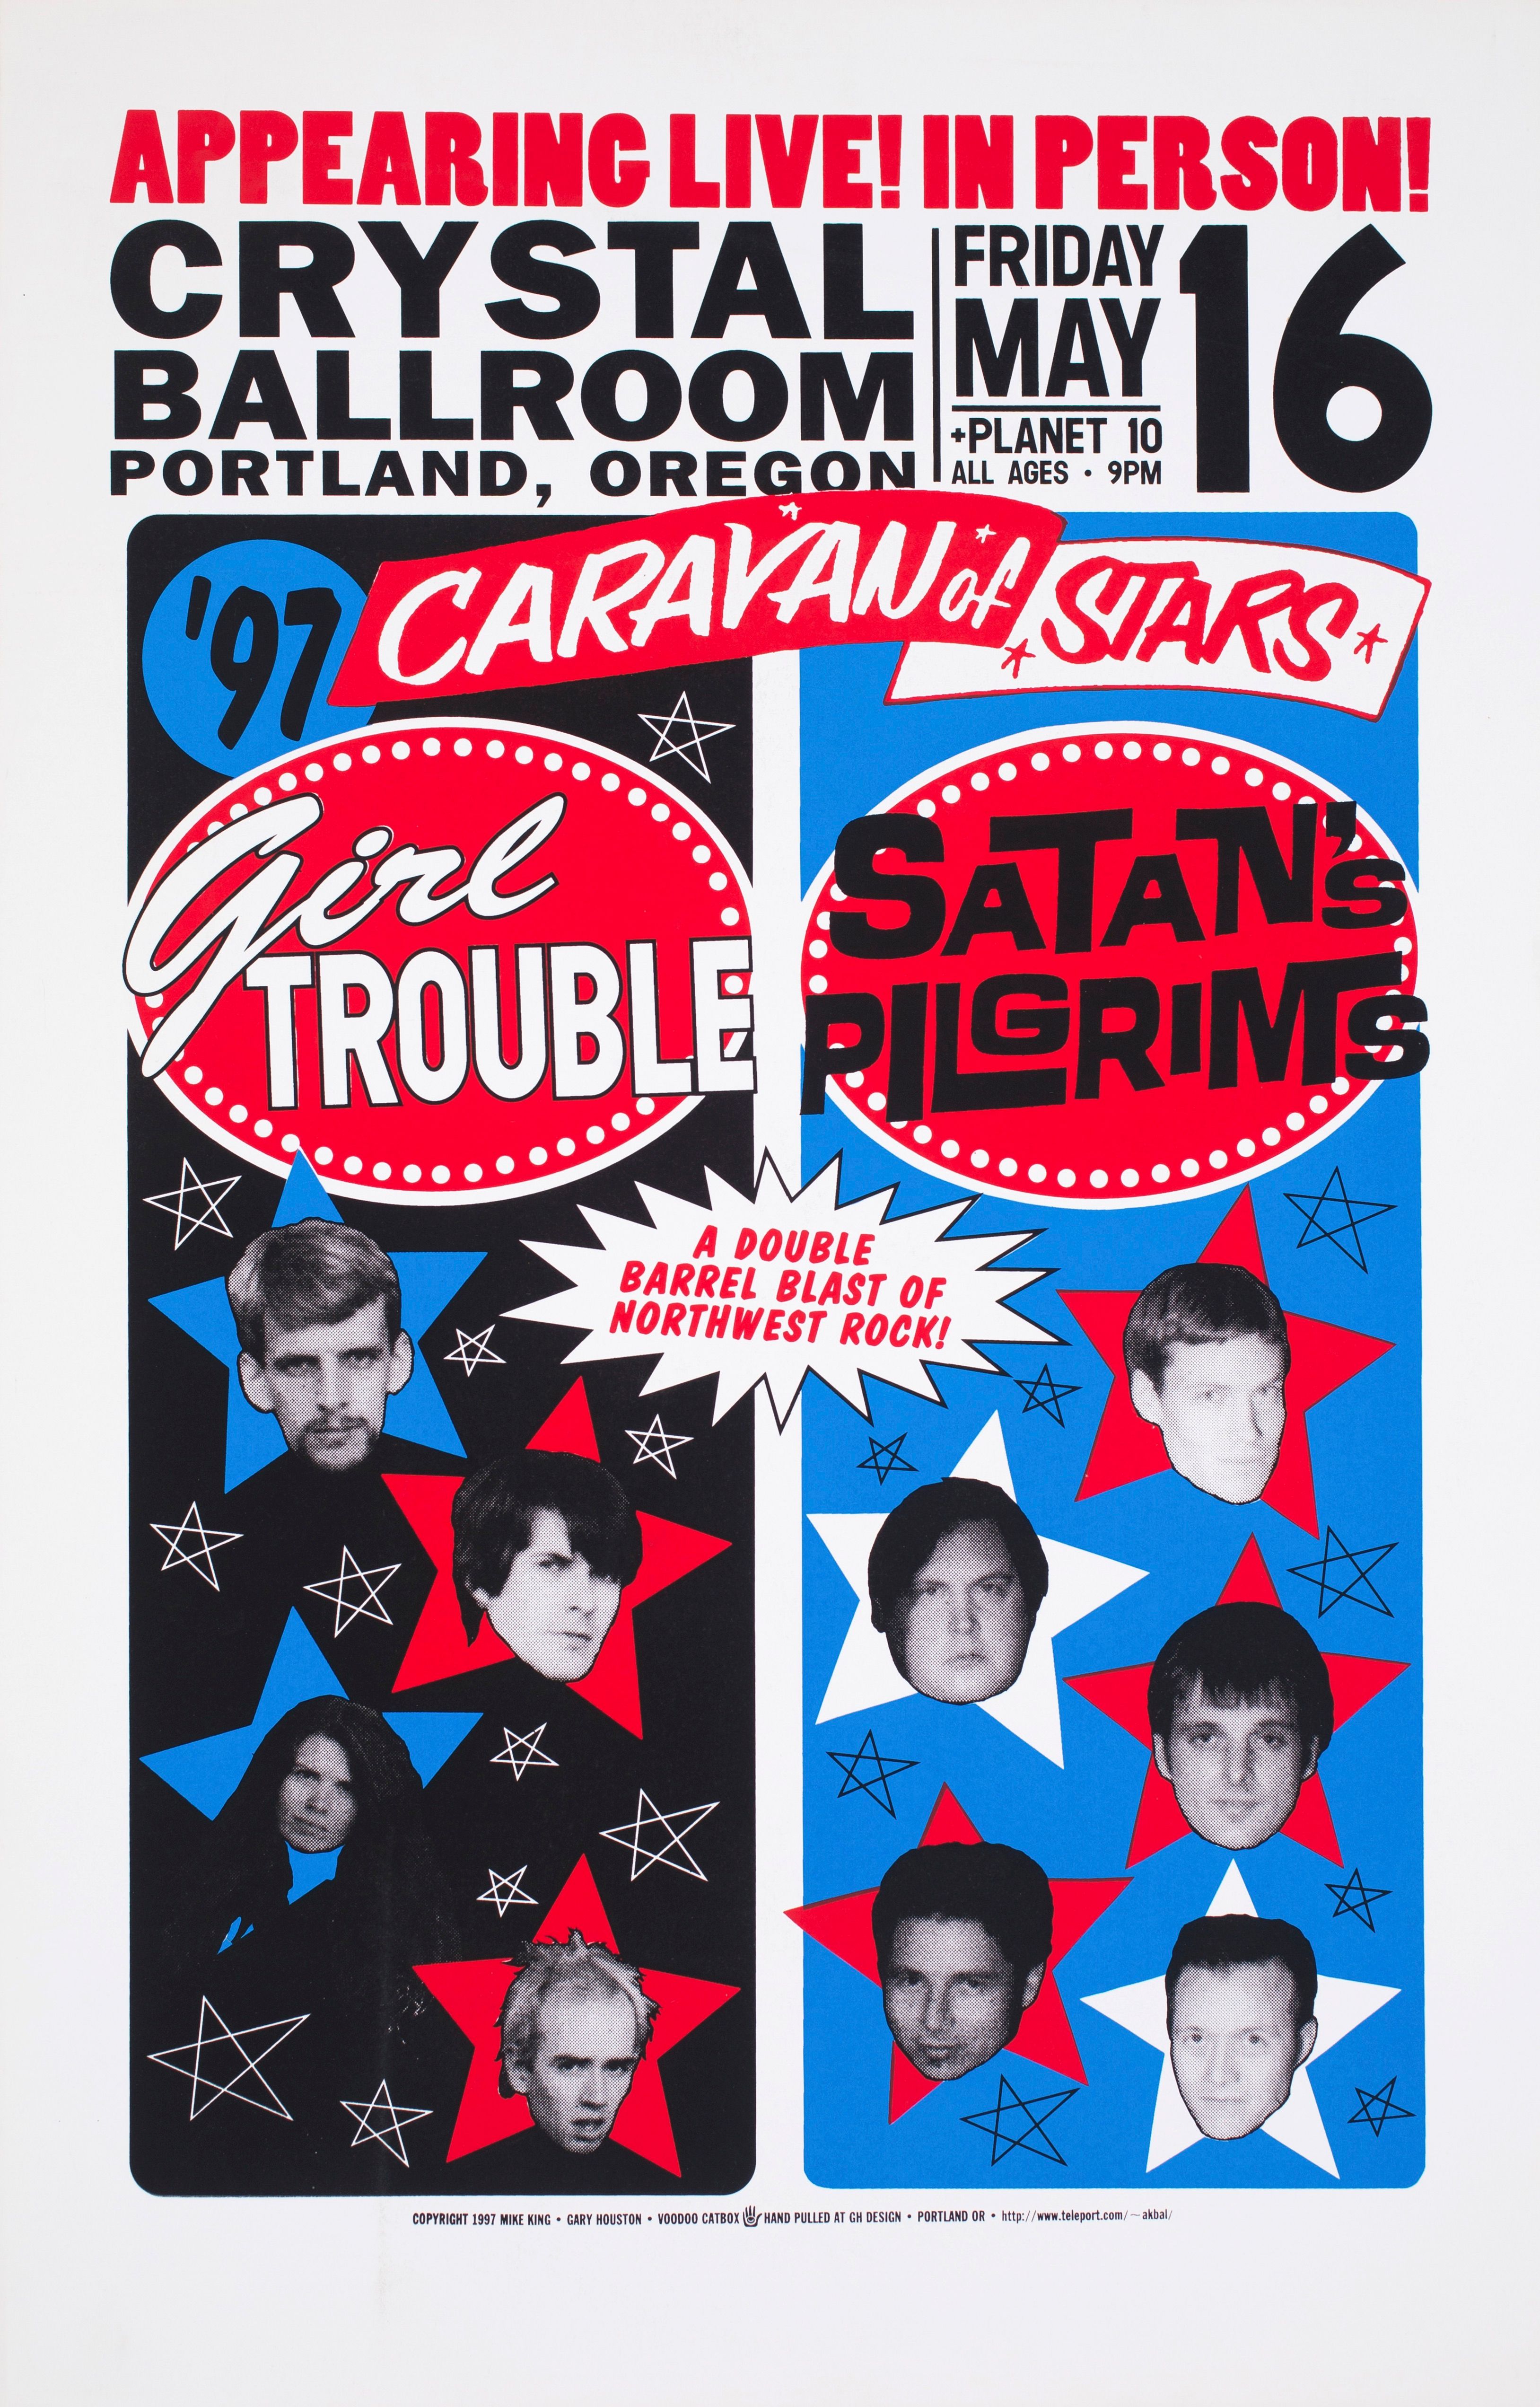 MXP-201.1 Girl Trouble 1997 Crystal Ballroom  May 16 Concert Poster